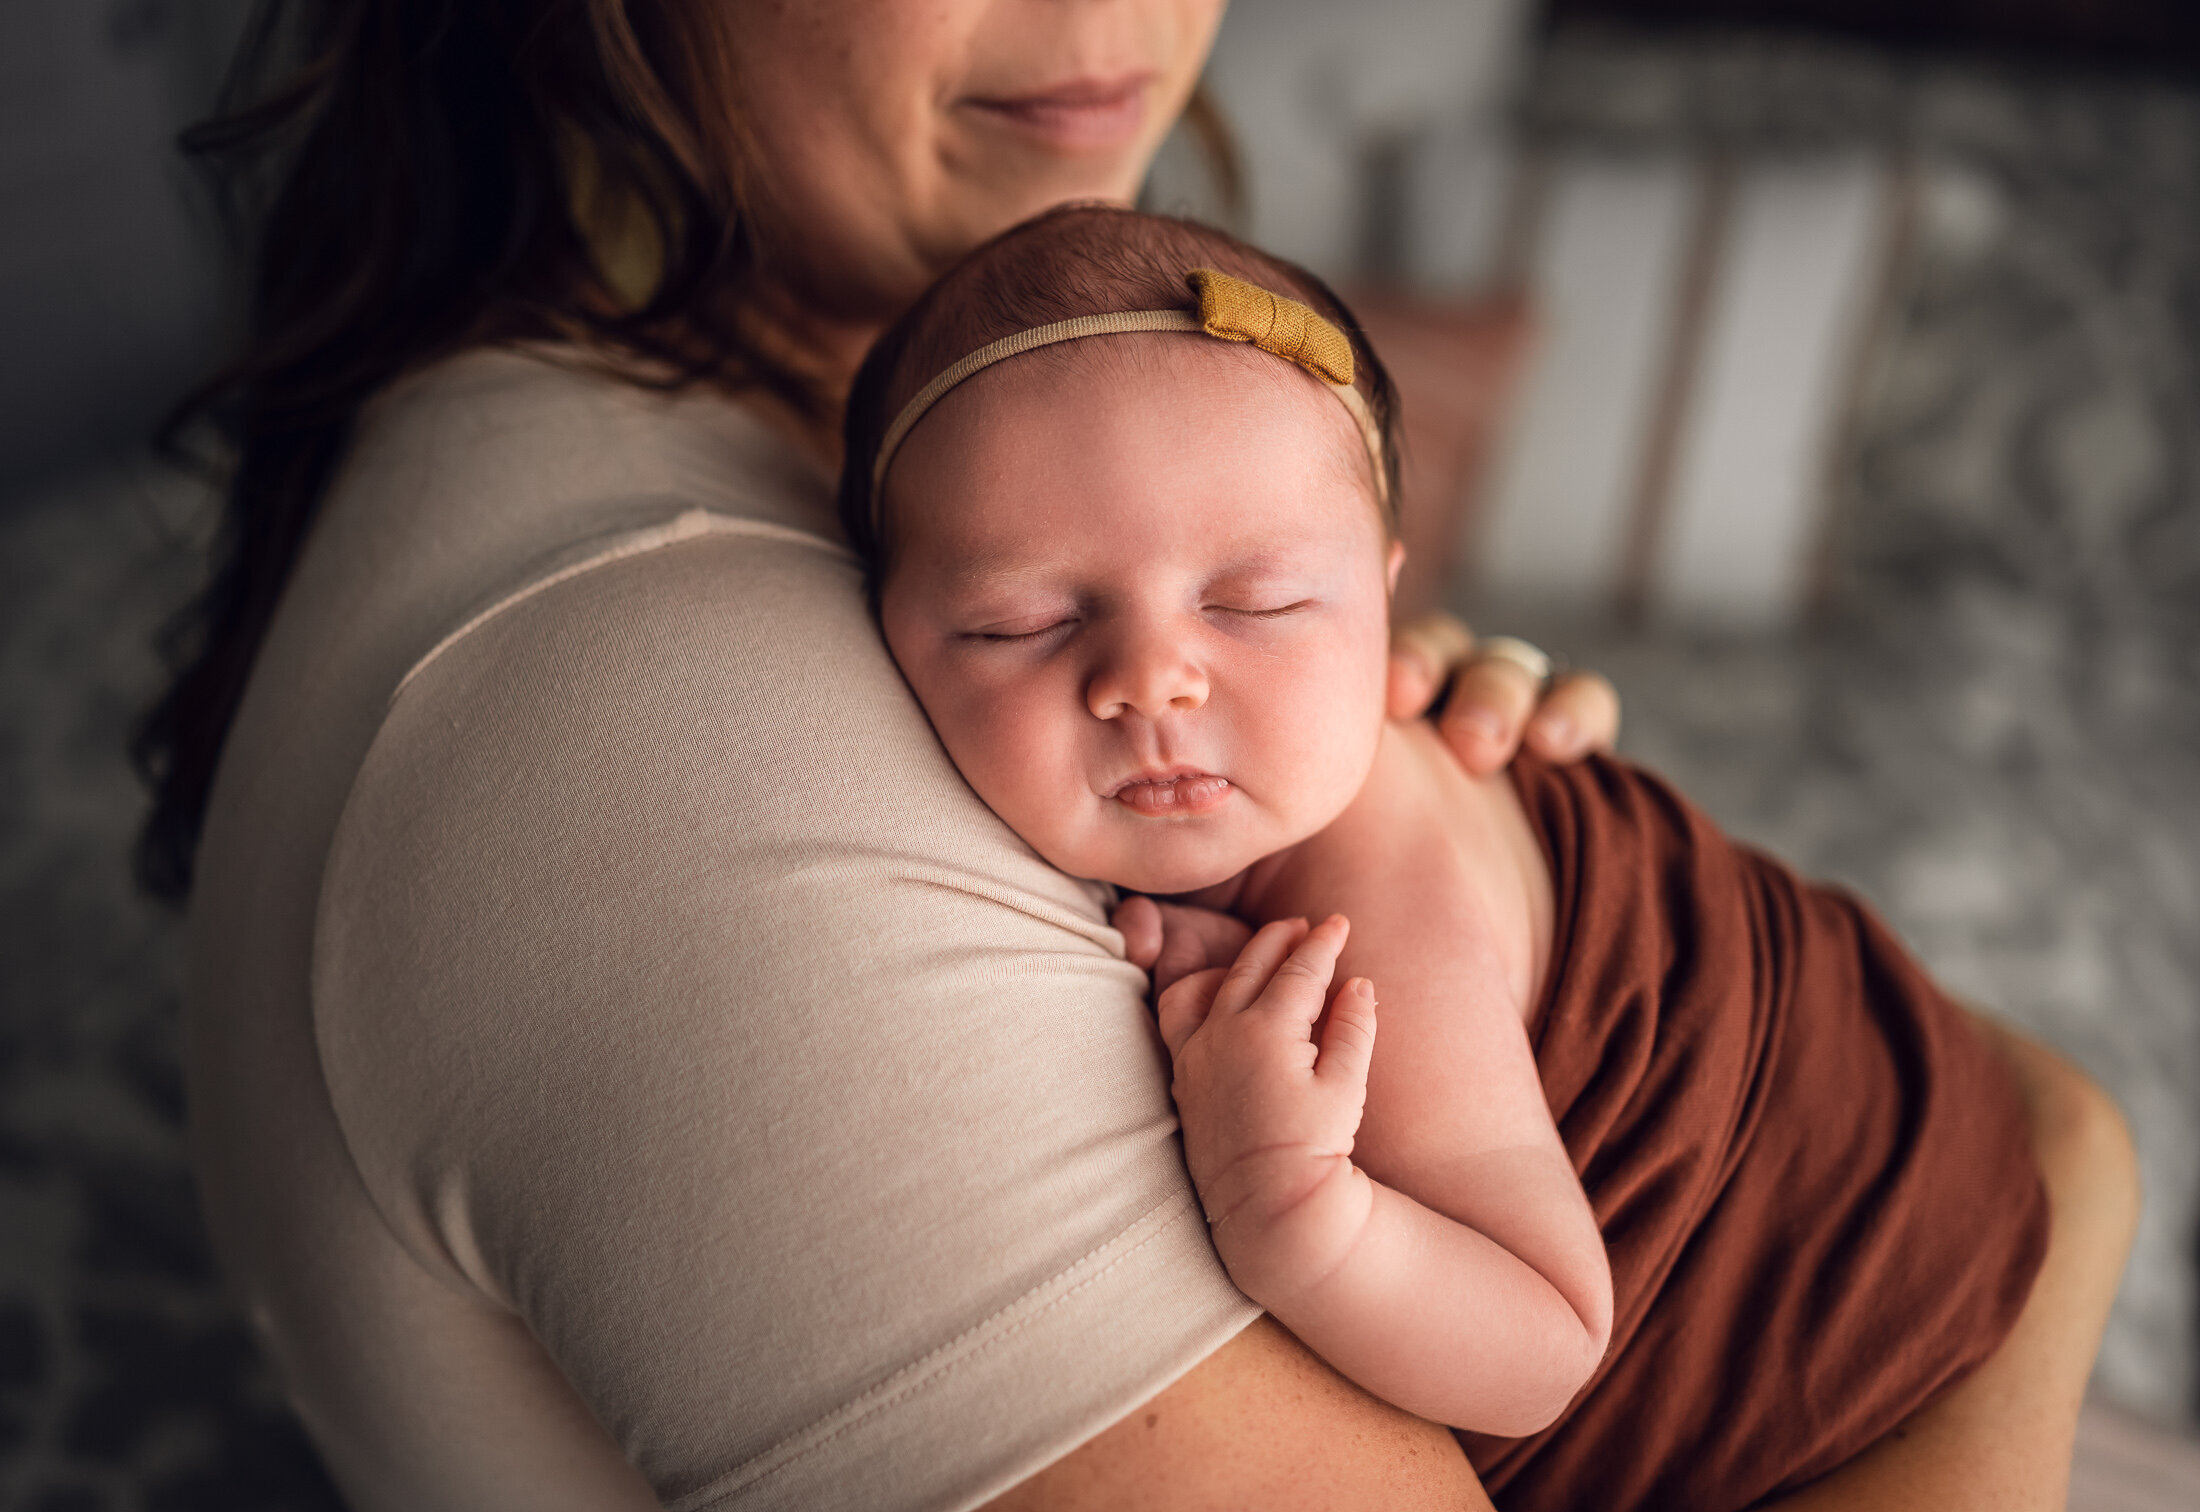 in-home newborn session by Mackenzie Thada